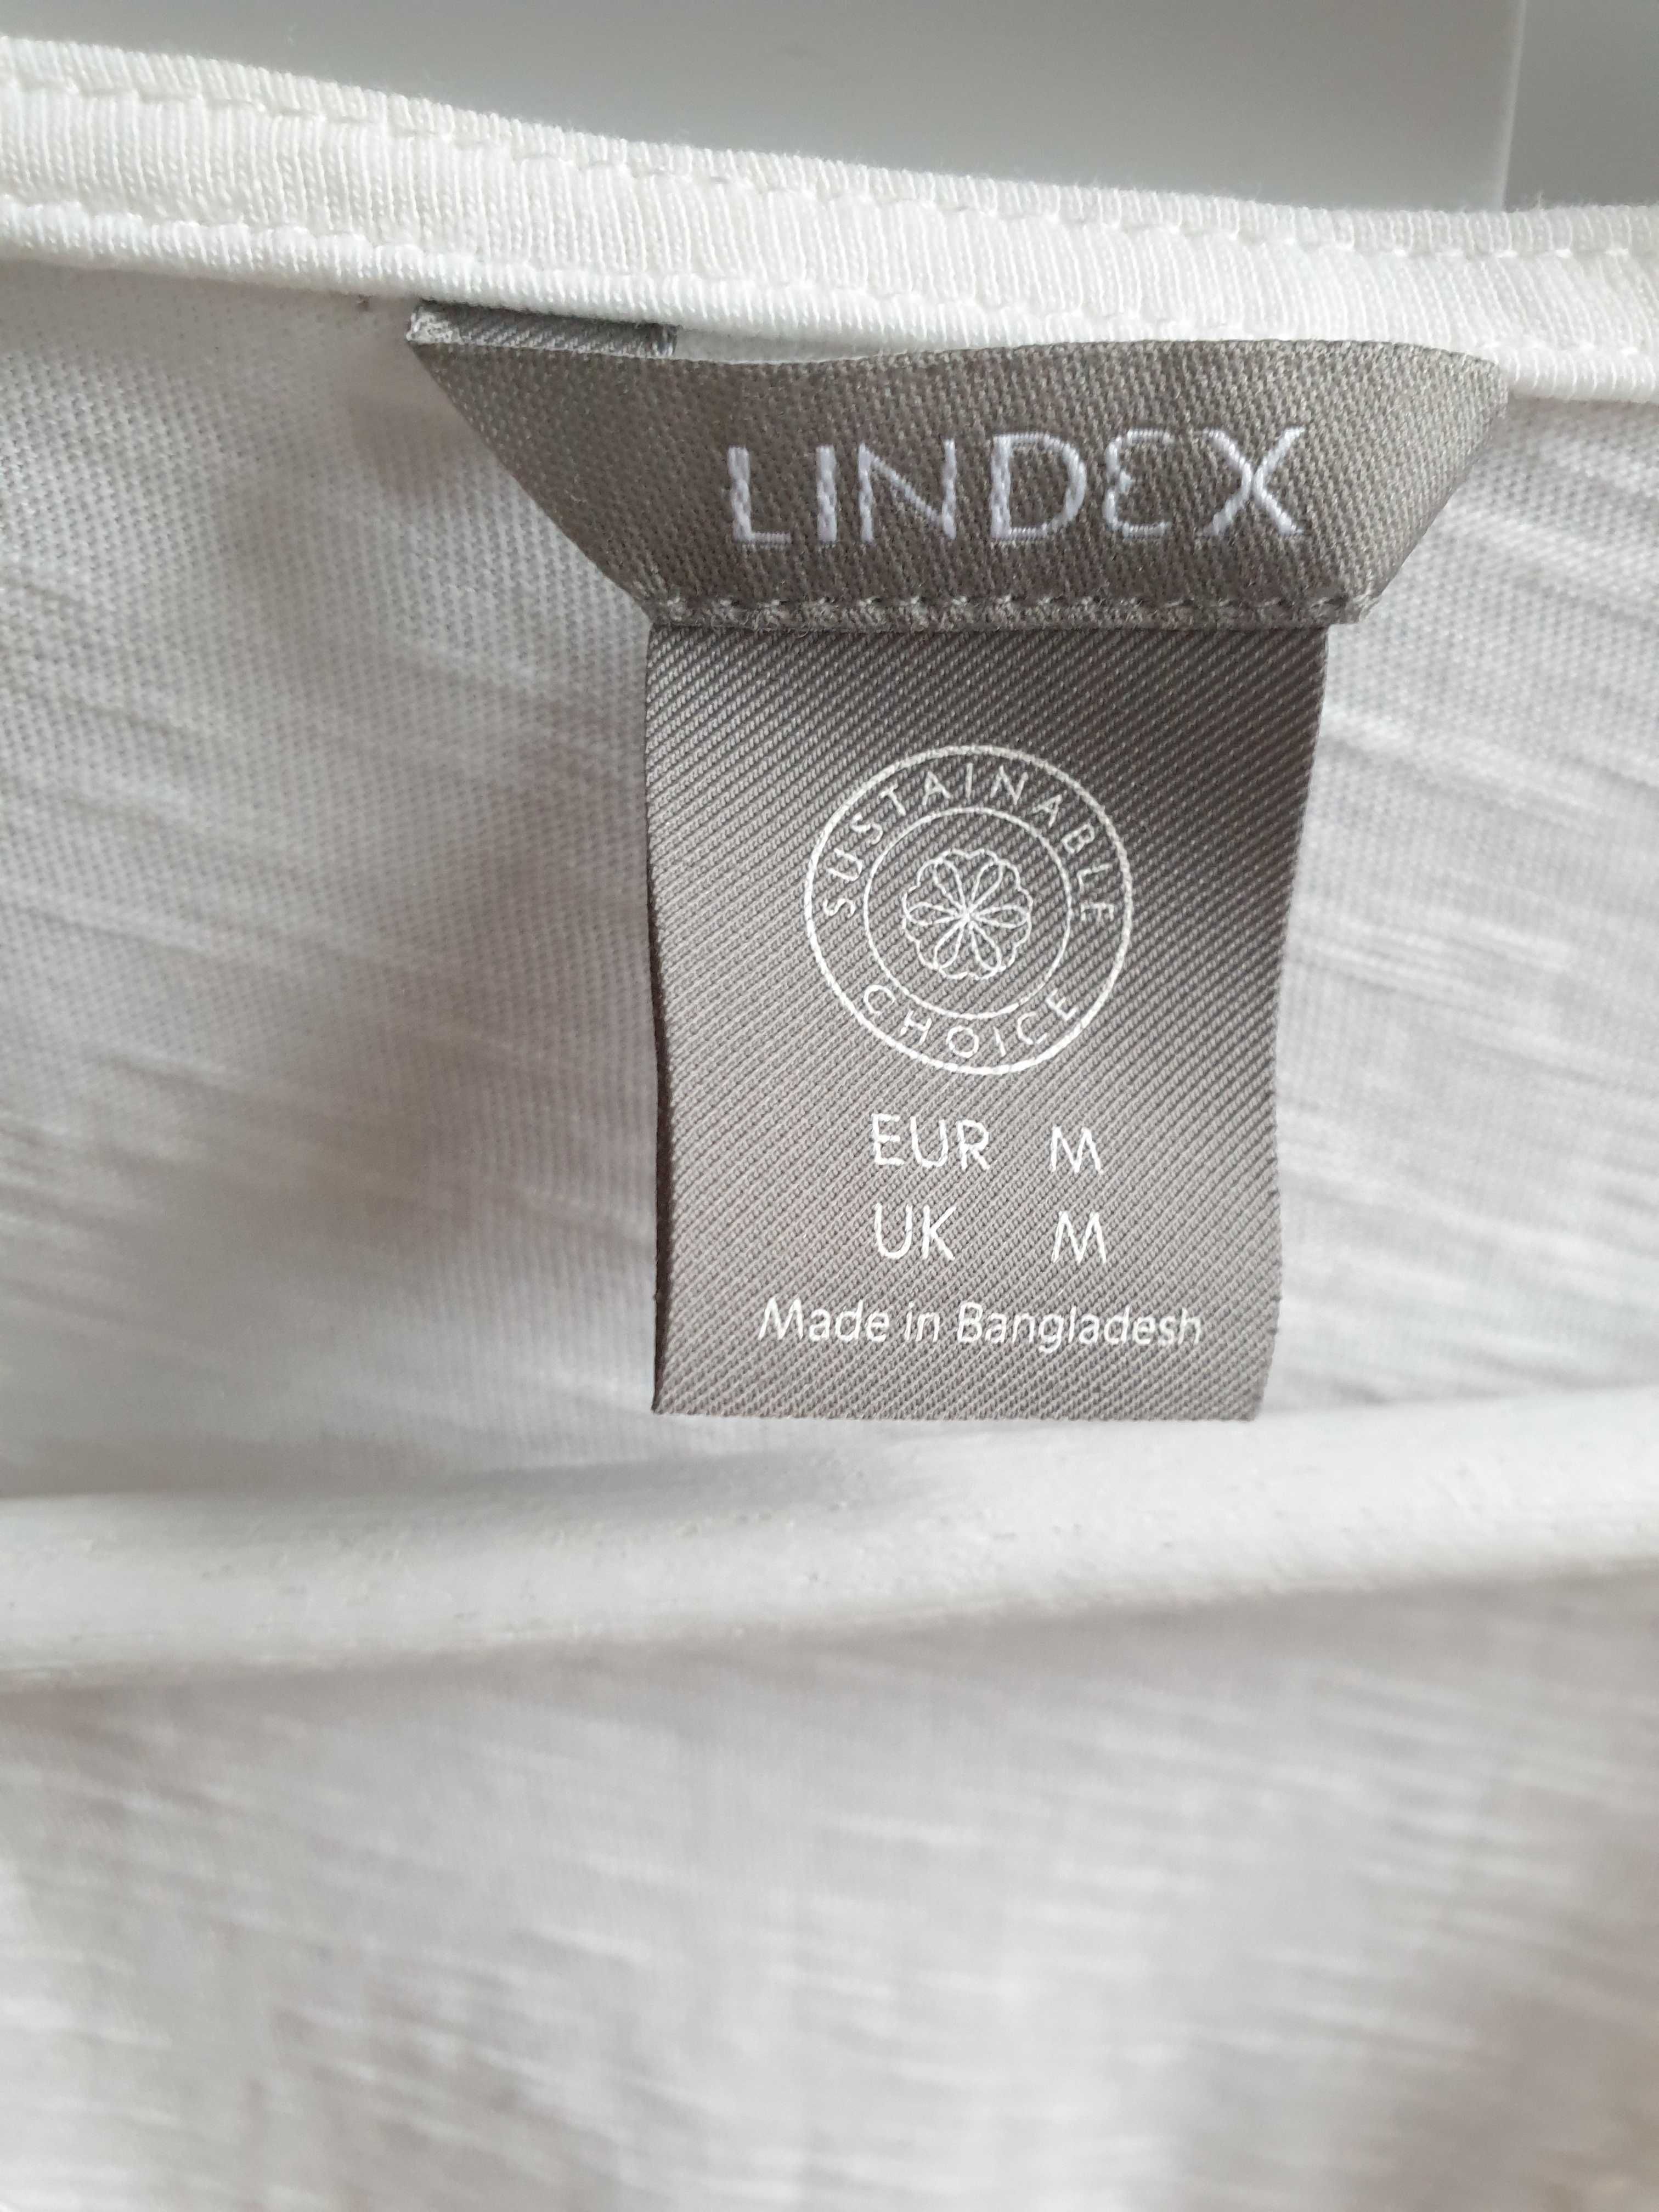 Biała bluzka koszulka t-shirt w serek koronkowa Lindex 38 40